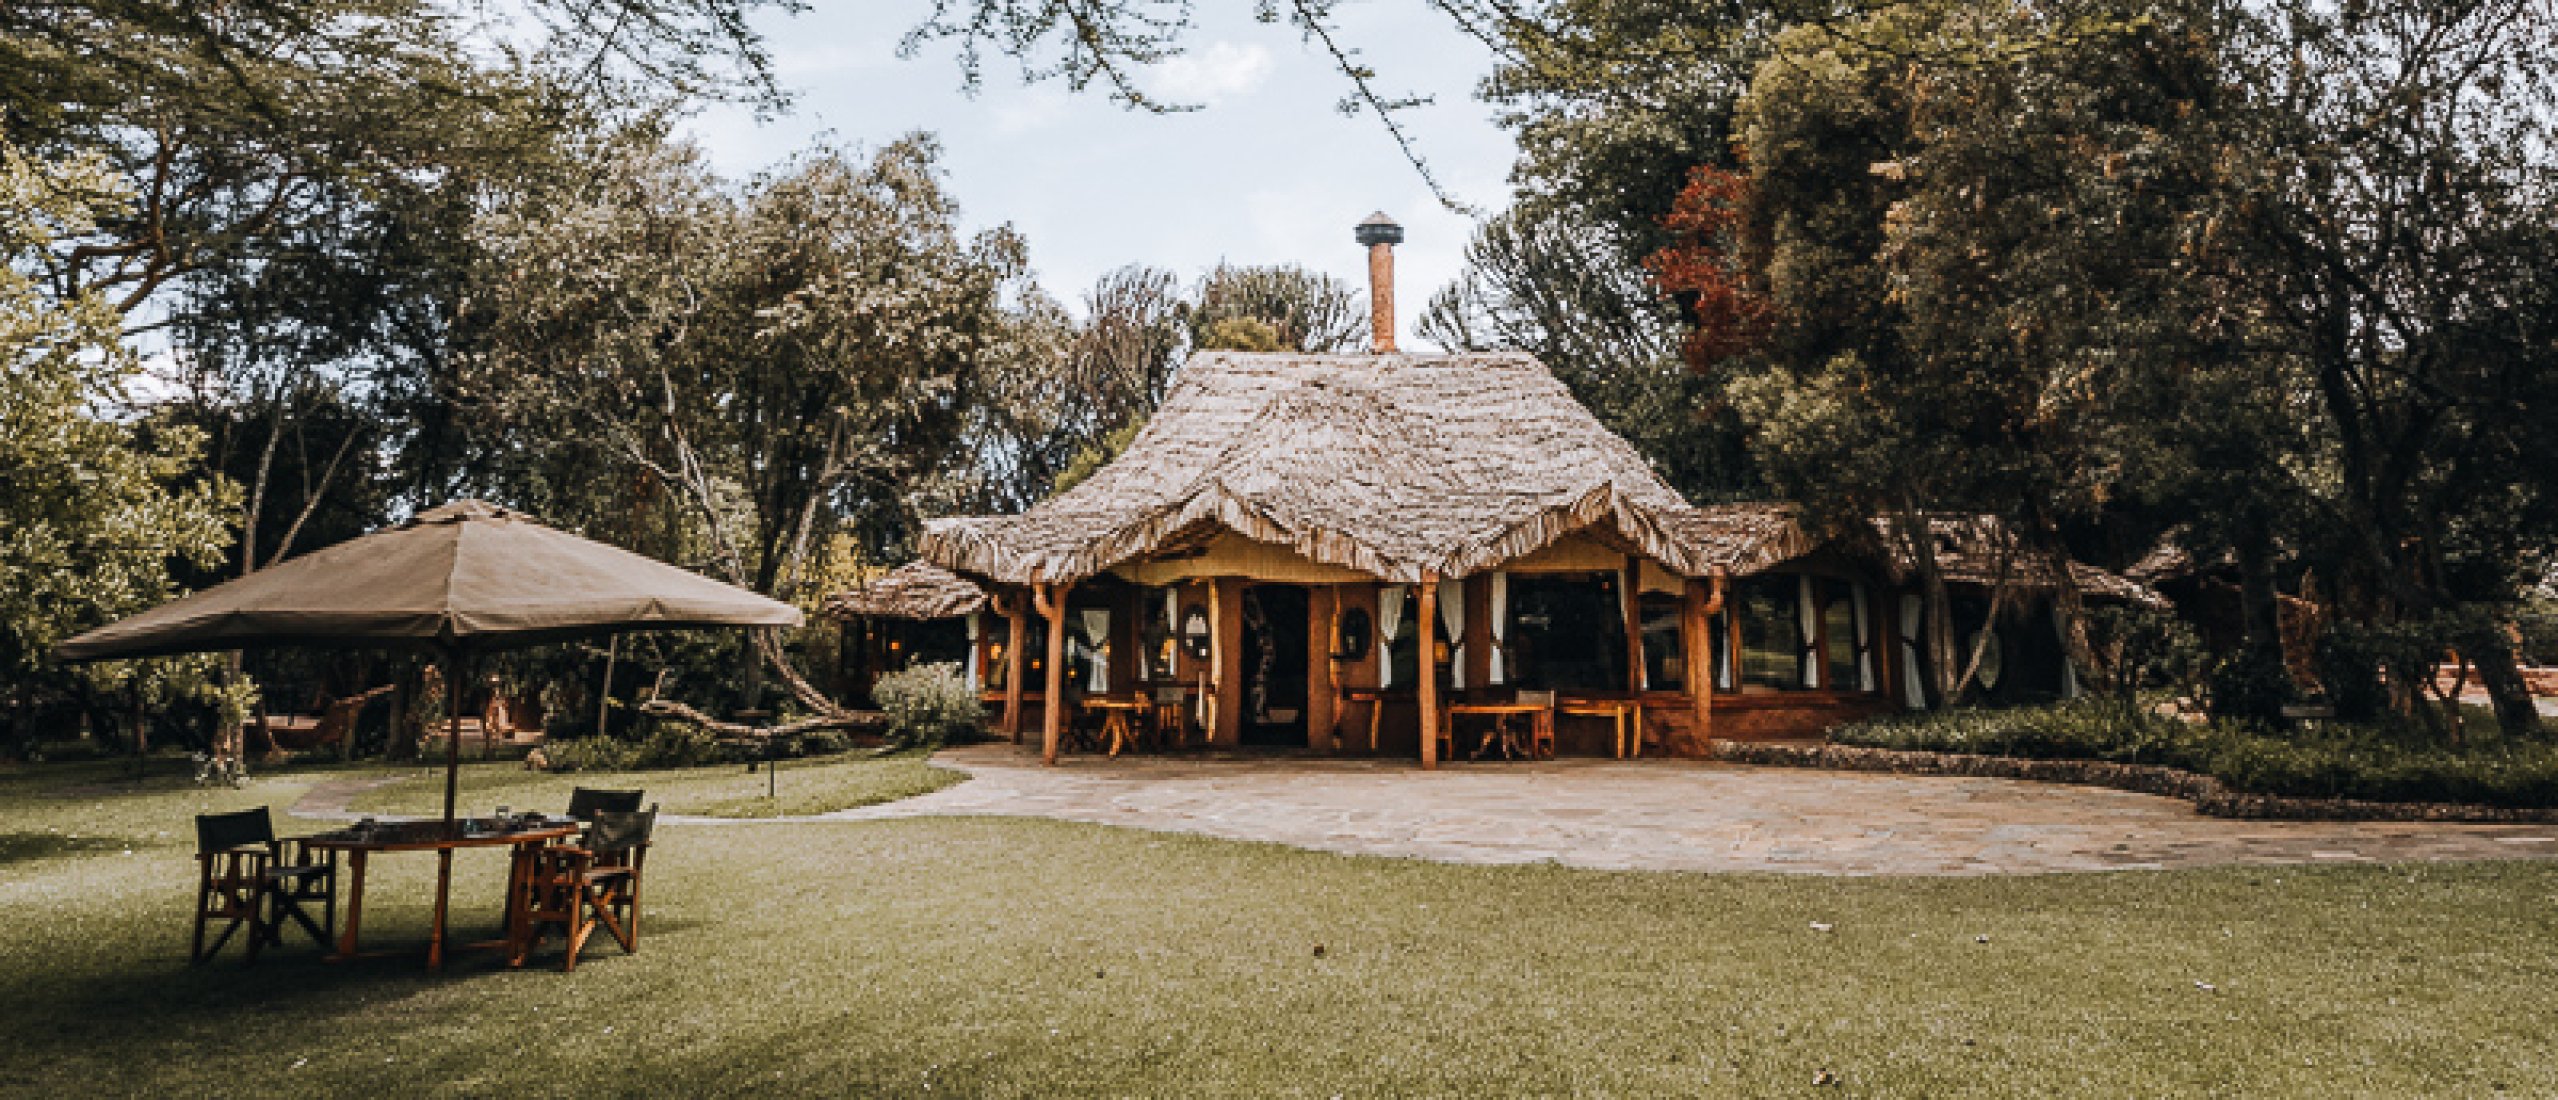 Best Place to Stay at Lake Naivasha on Safari in Kenya: Chui Lodge